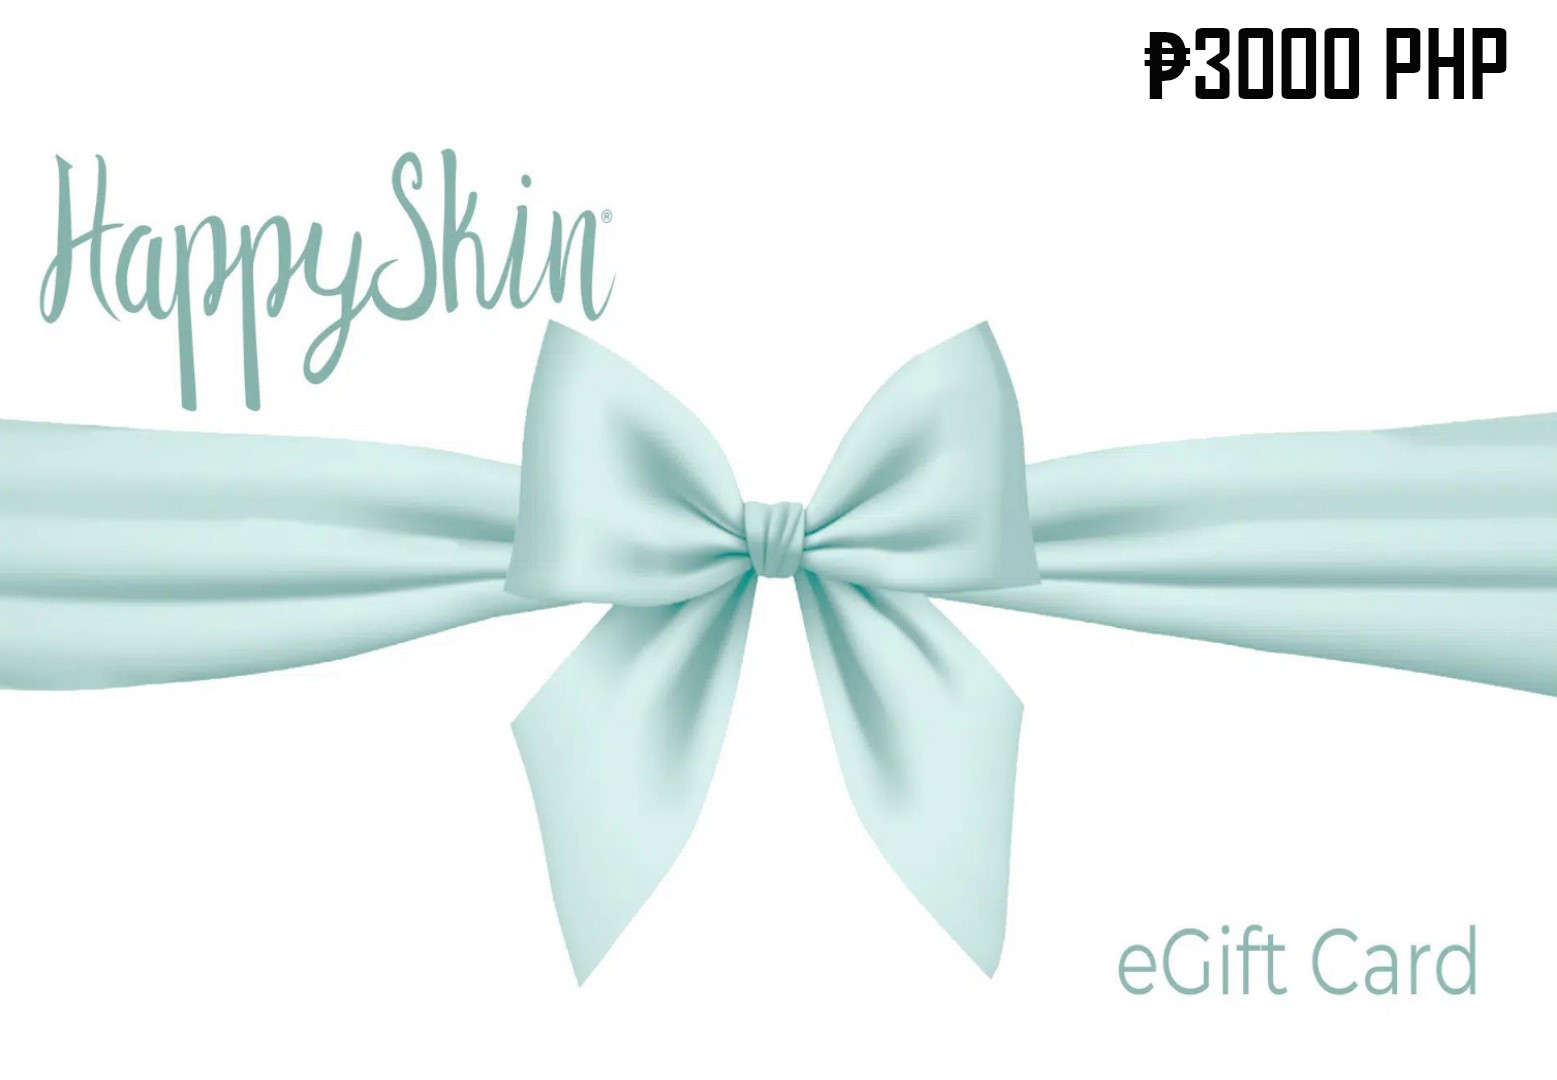 Happy Skin ₱3000 PH Gift Card, $62.52